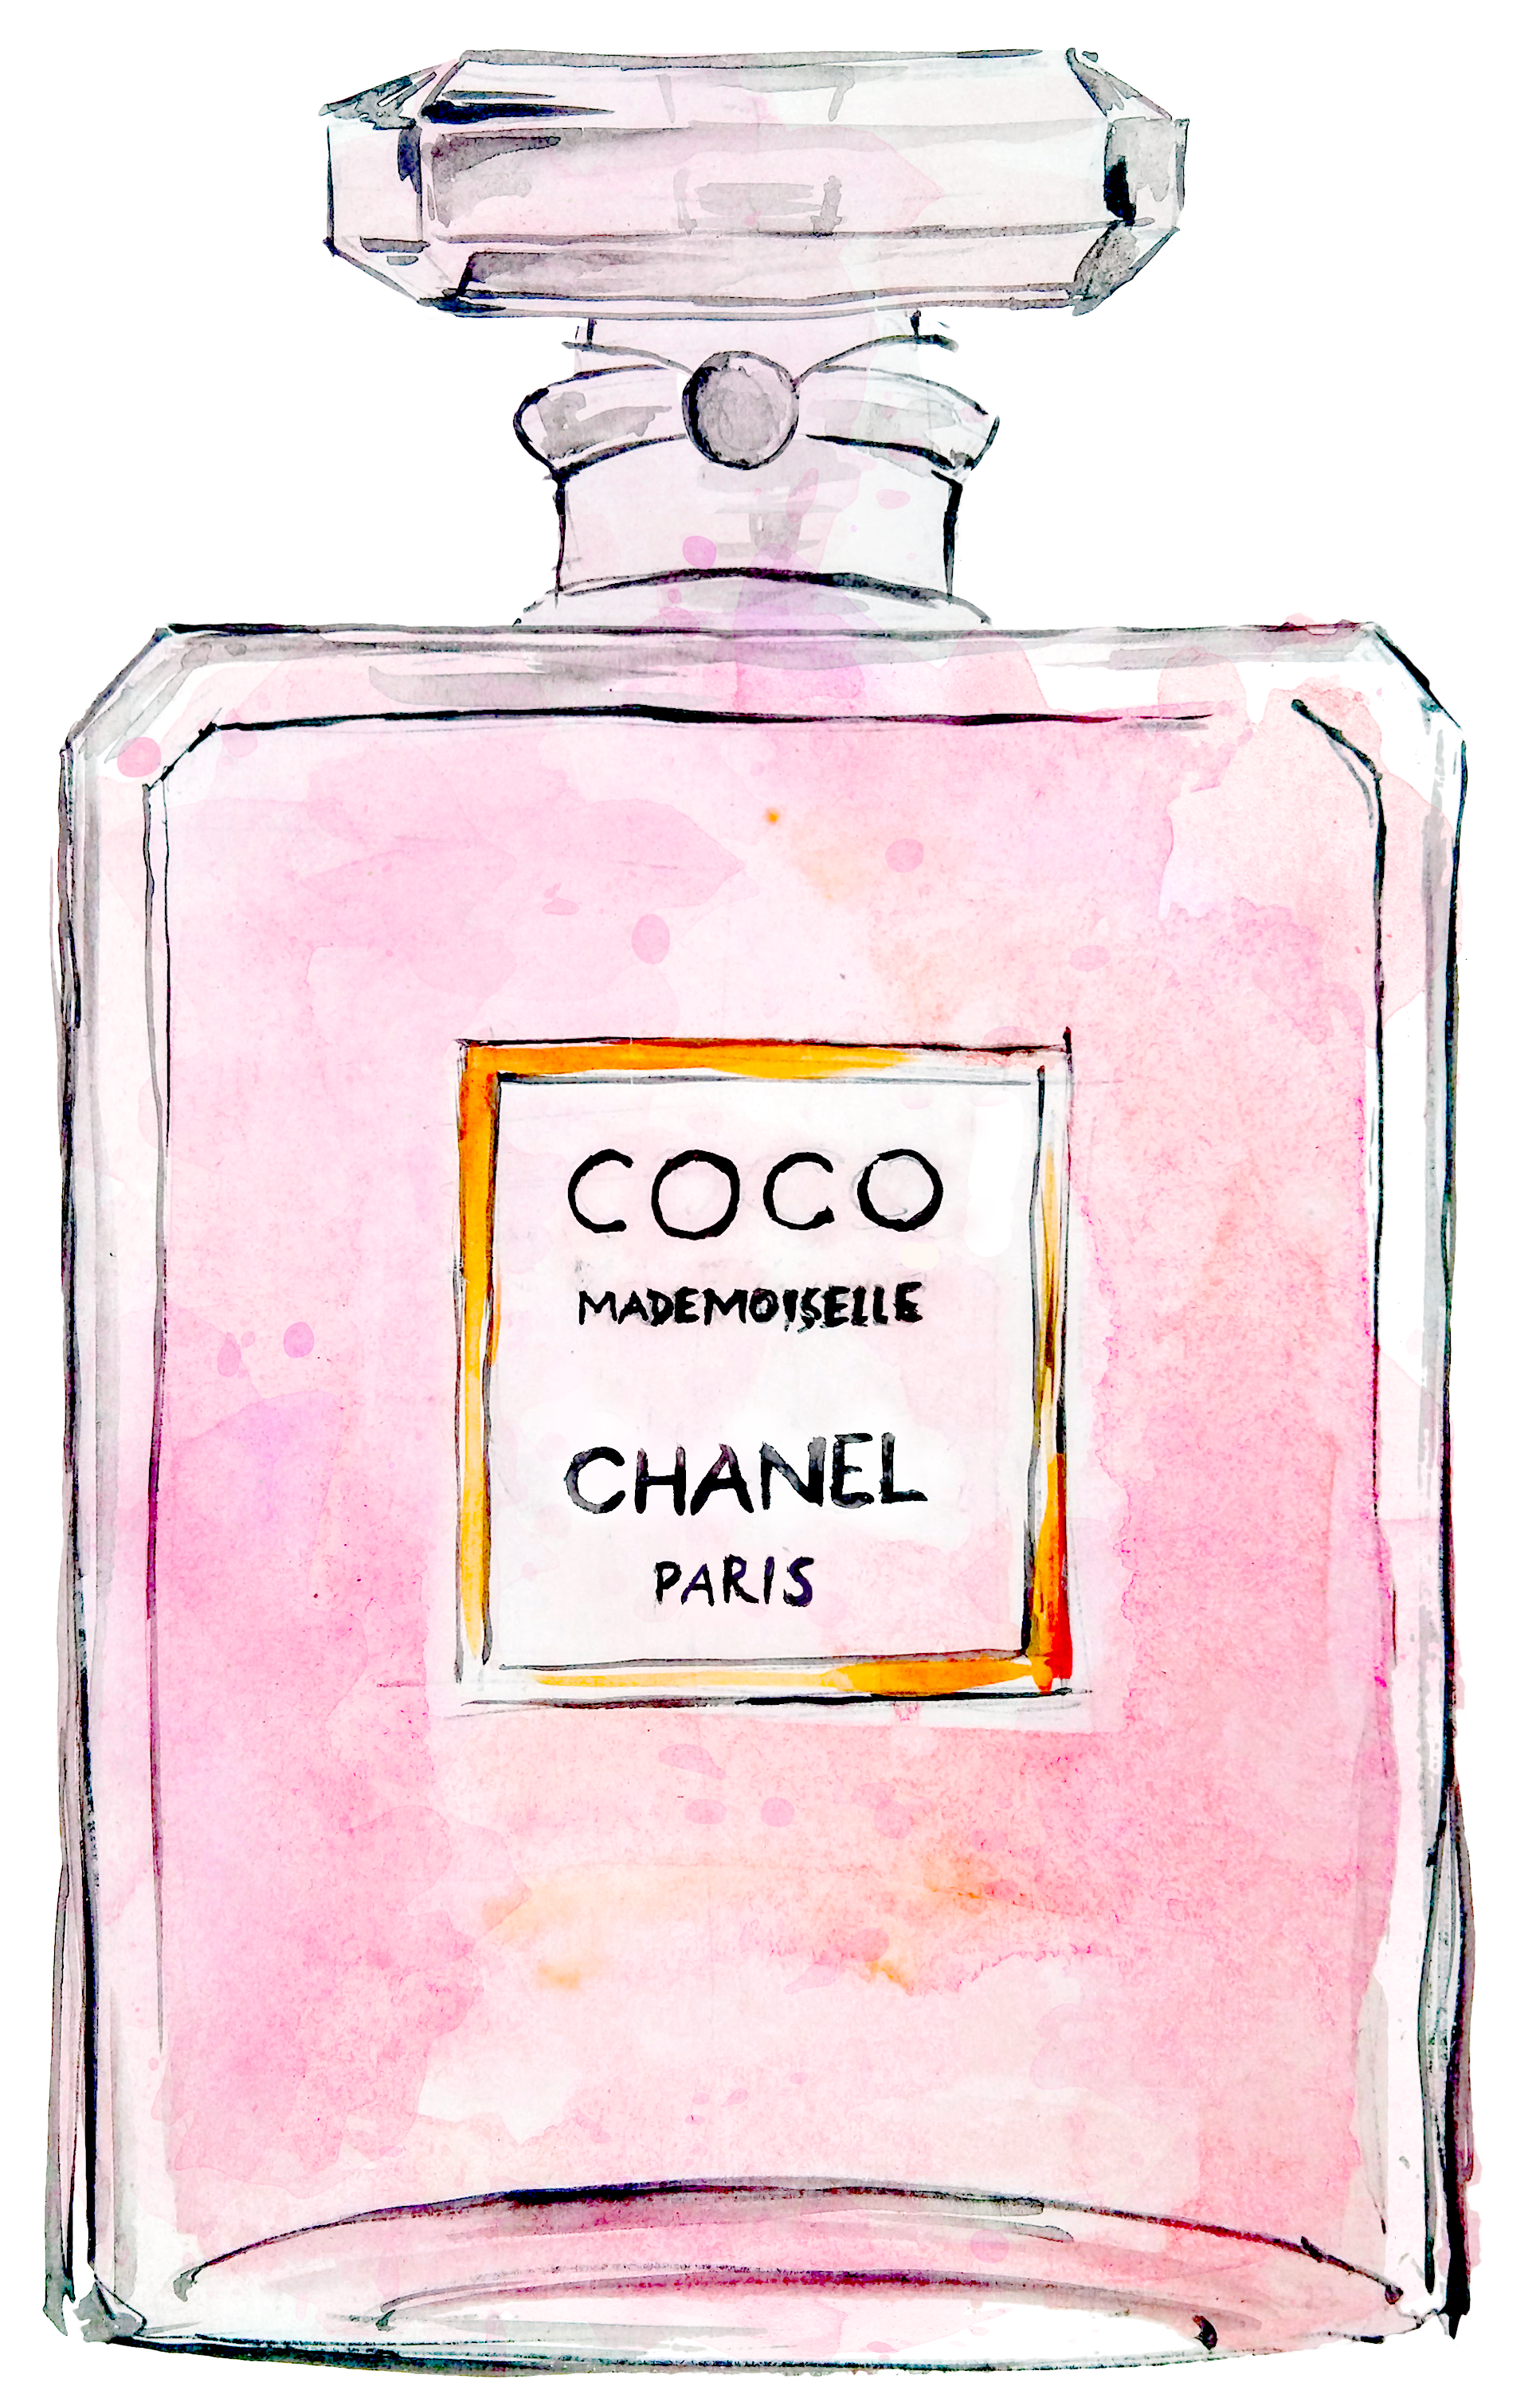 Download Mademoiselle No Chanel Coco Perfume Coco Chanel Hq Png Image Freepngimg